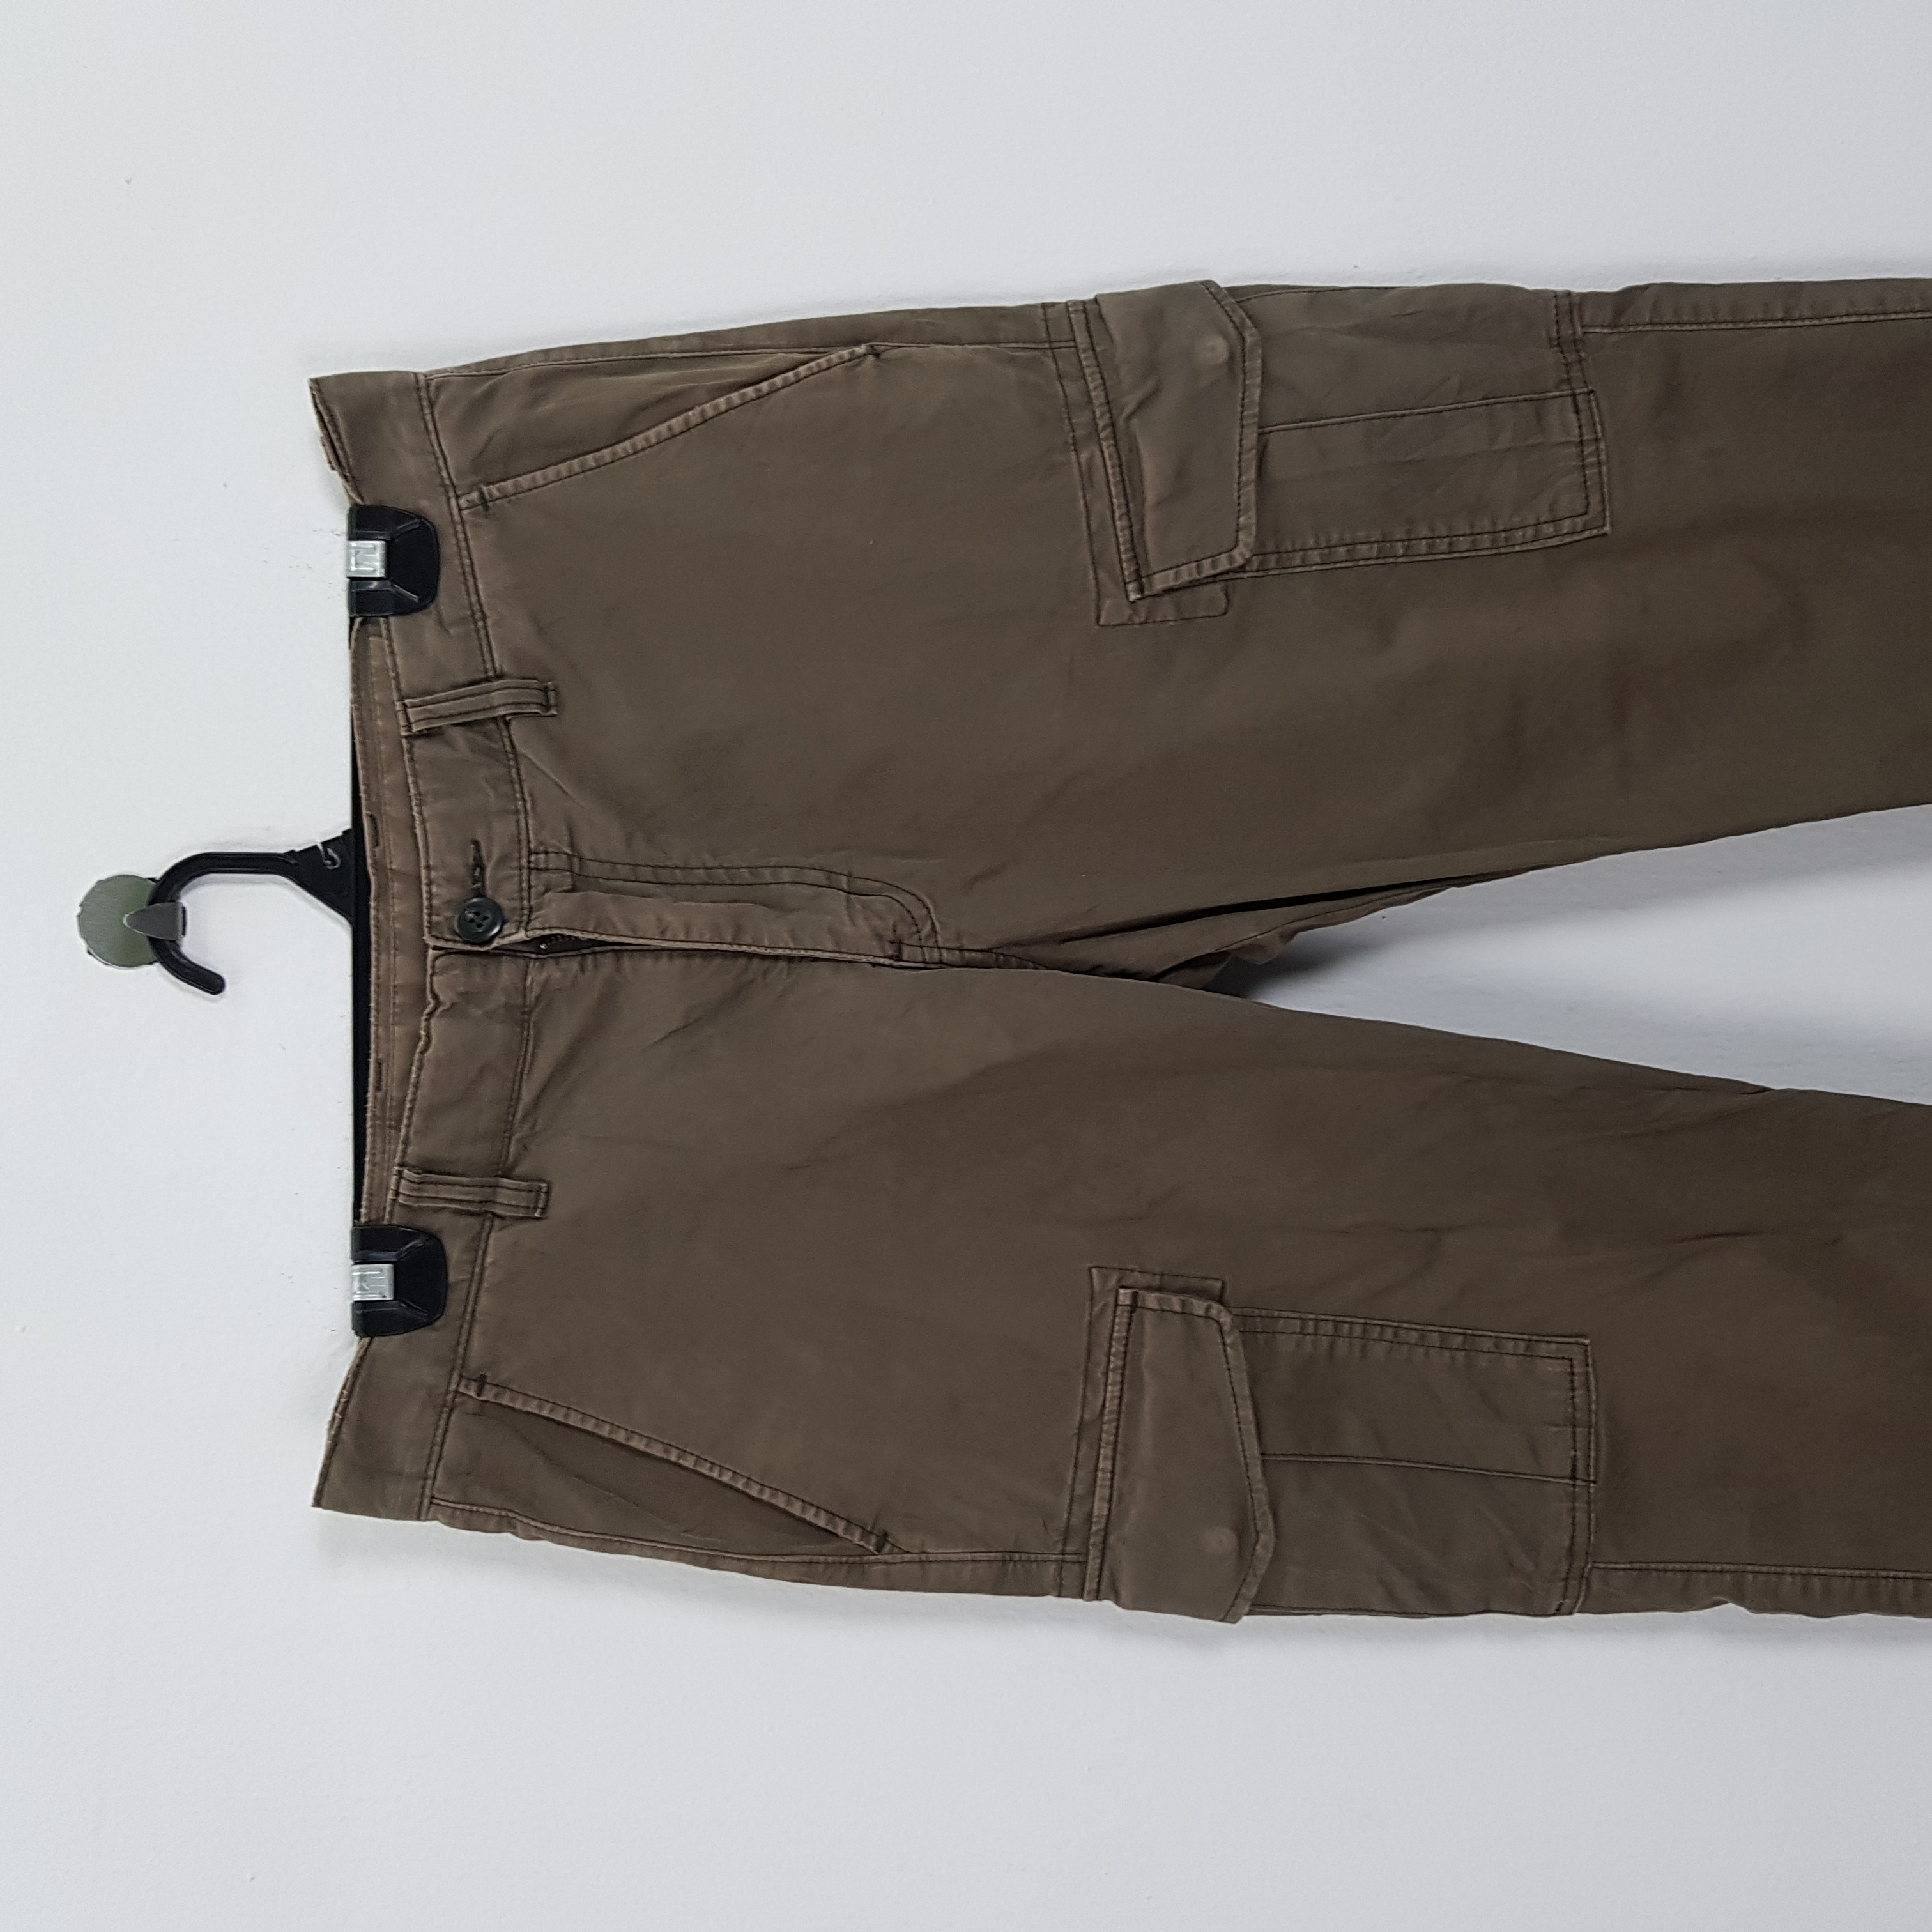 Other Designers Uniqlo - Uniqlo Cargo Pants Multipocket Utility Pants #5443, basgo